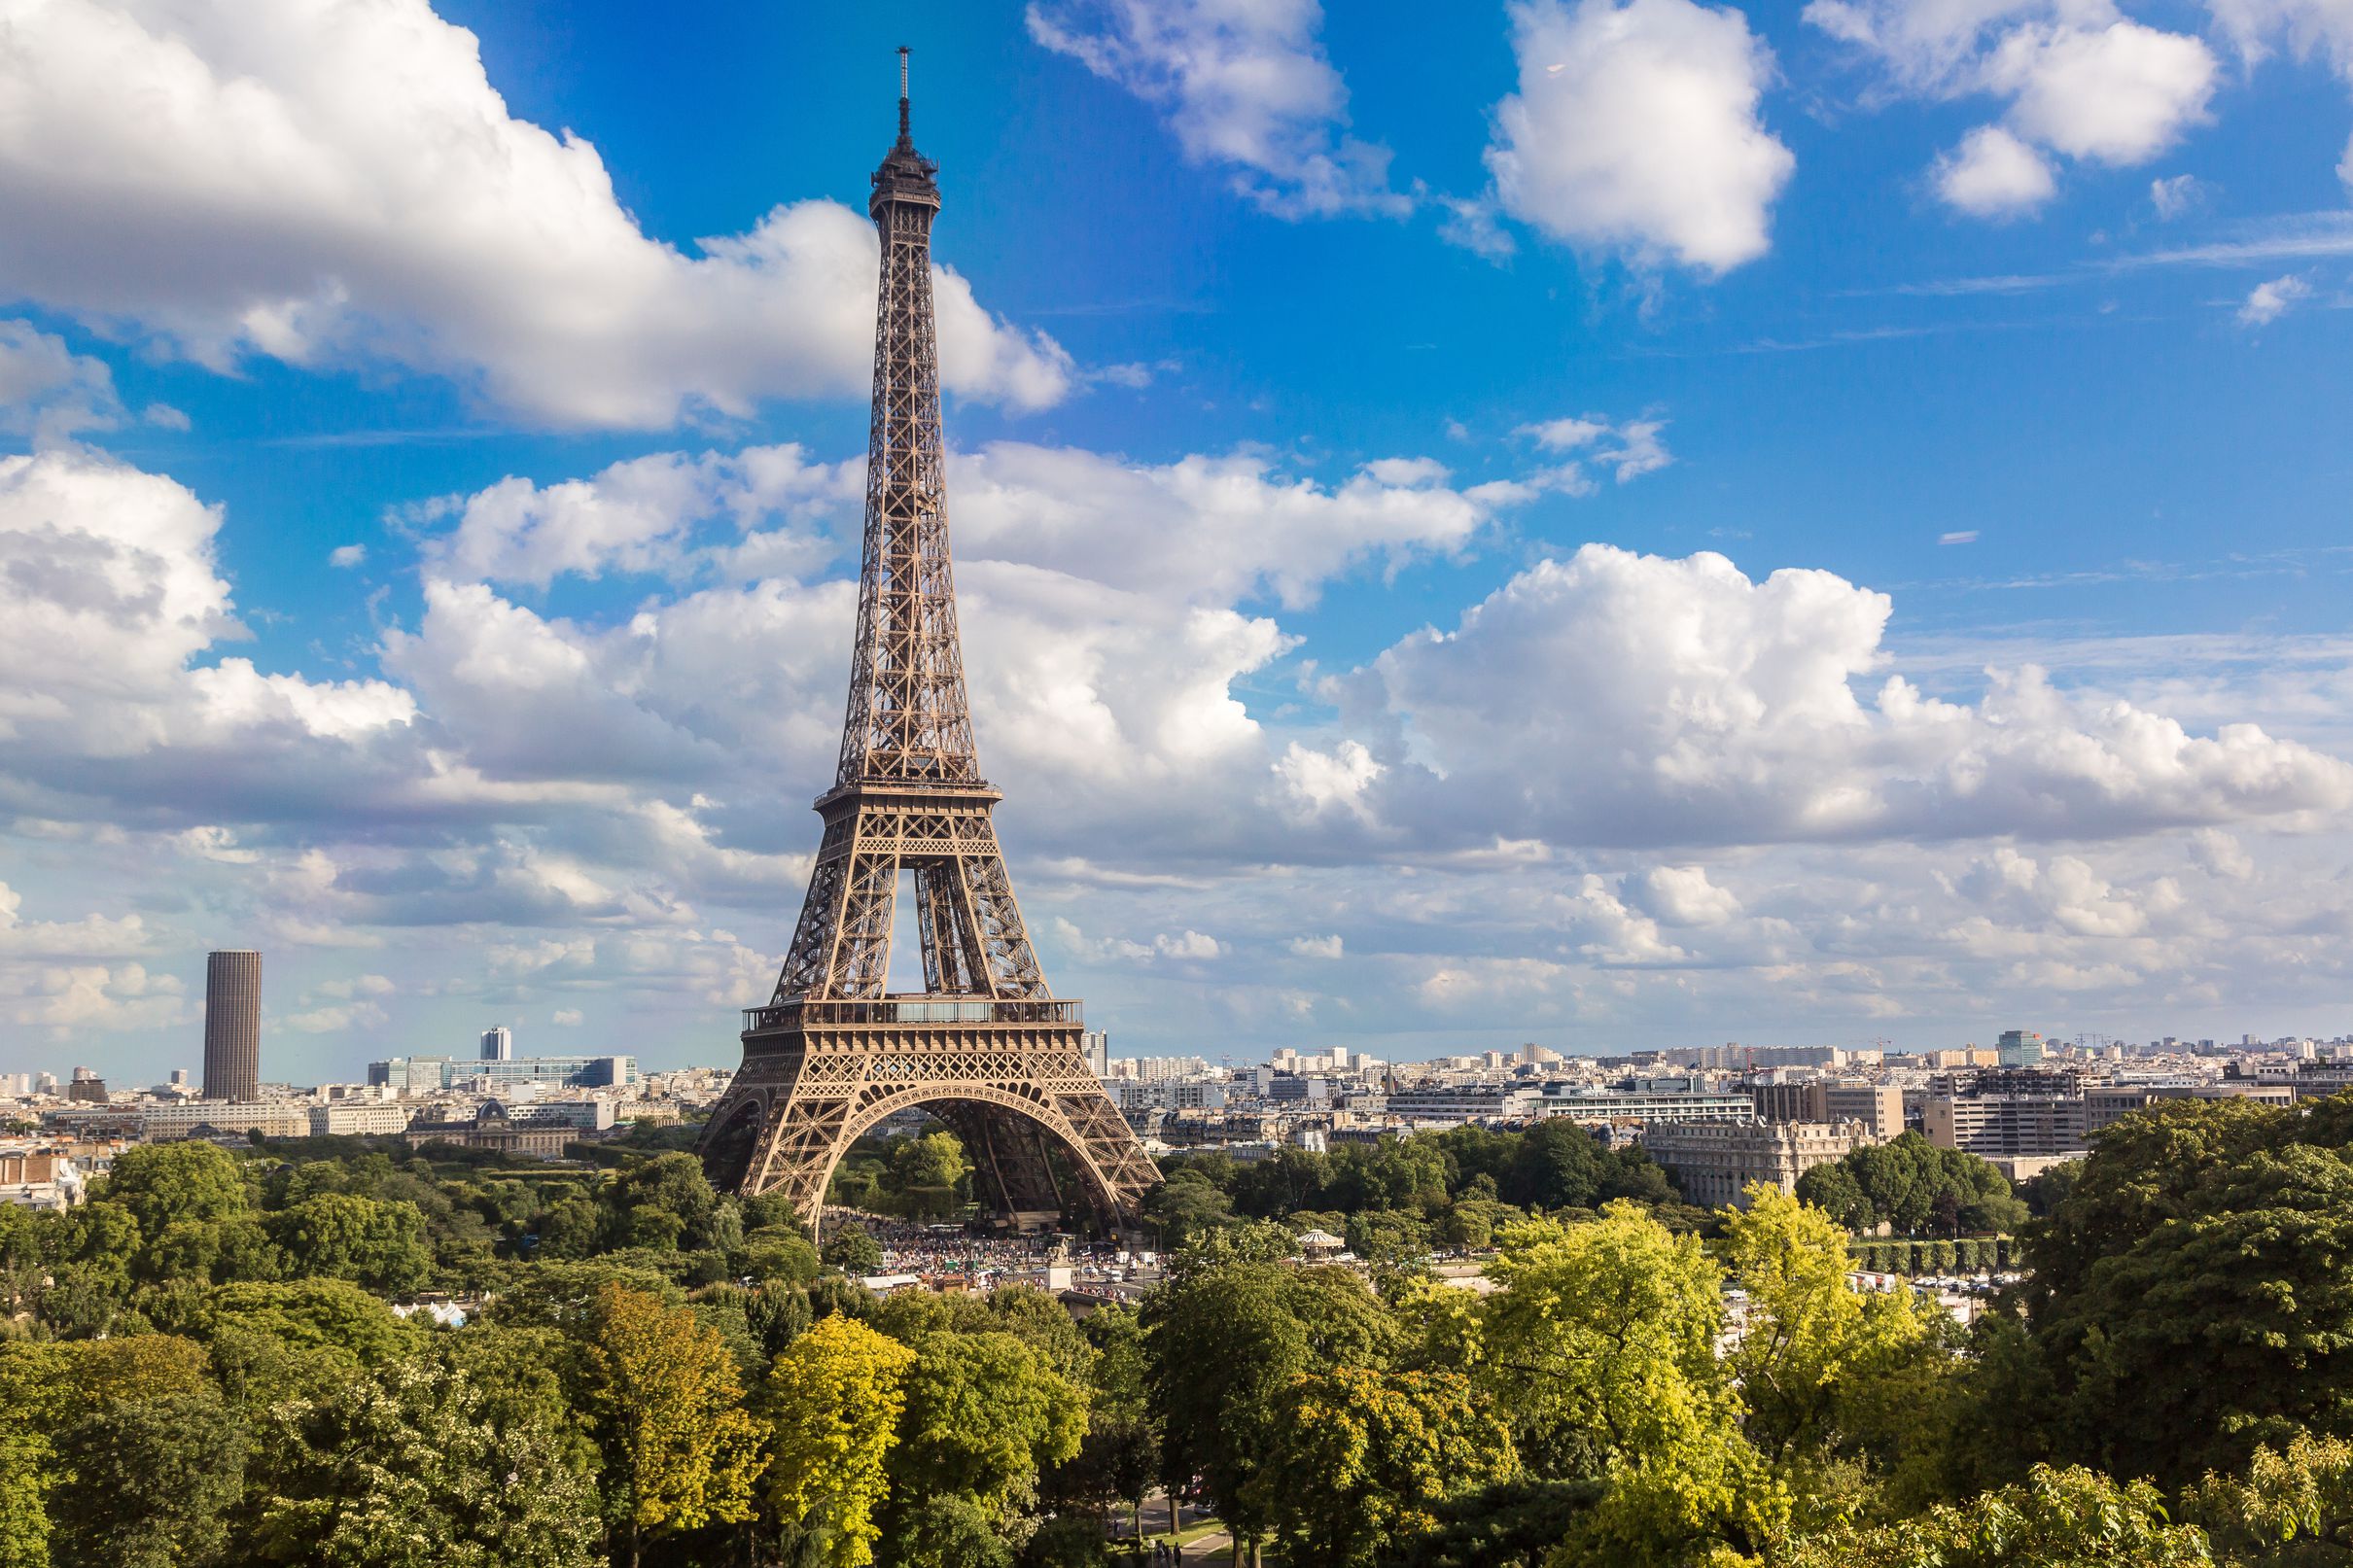 Image of Eiffel